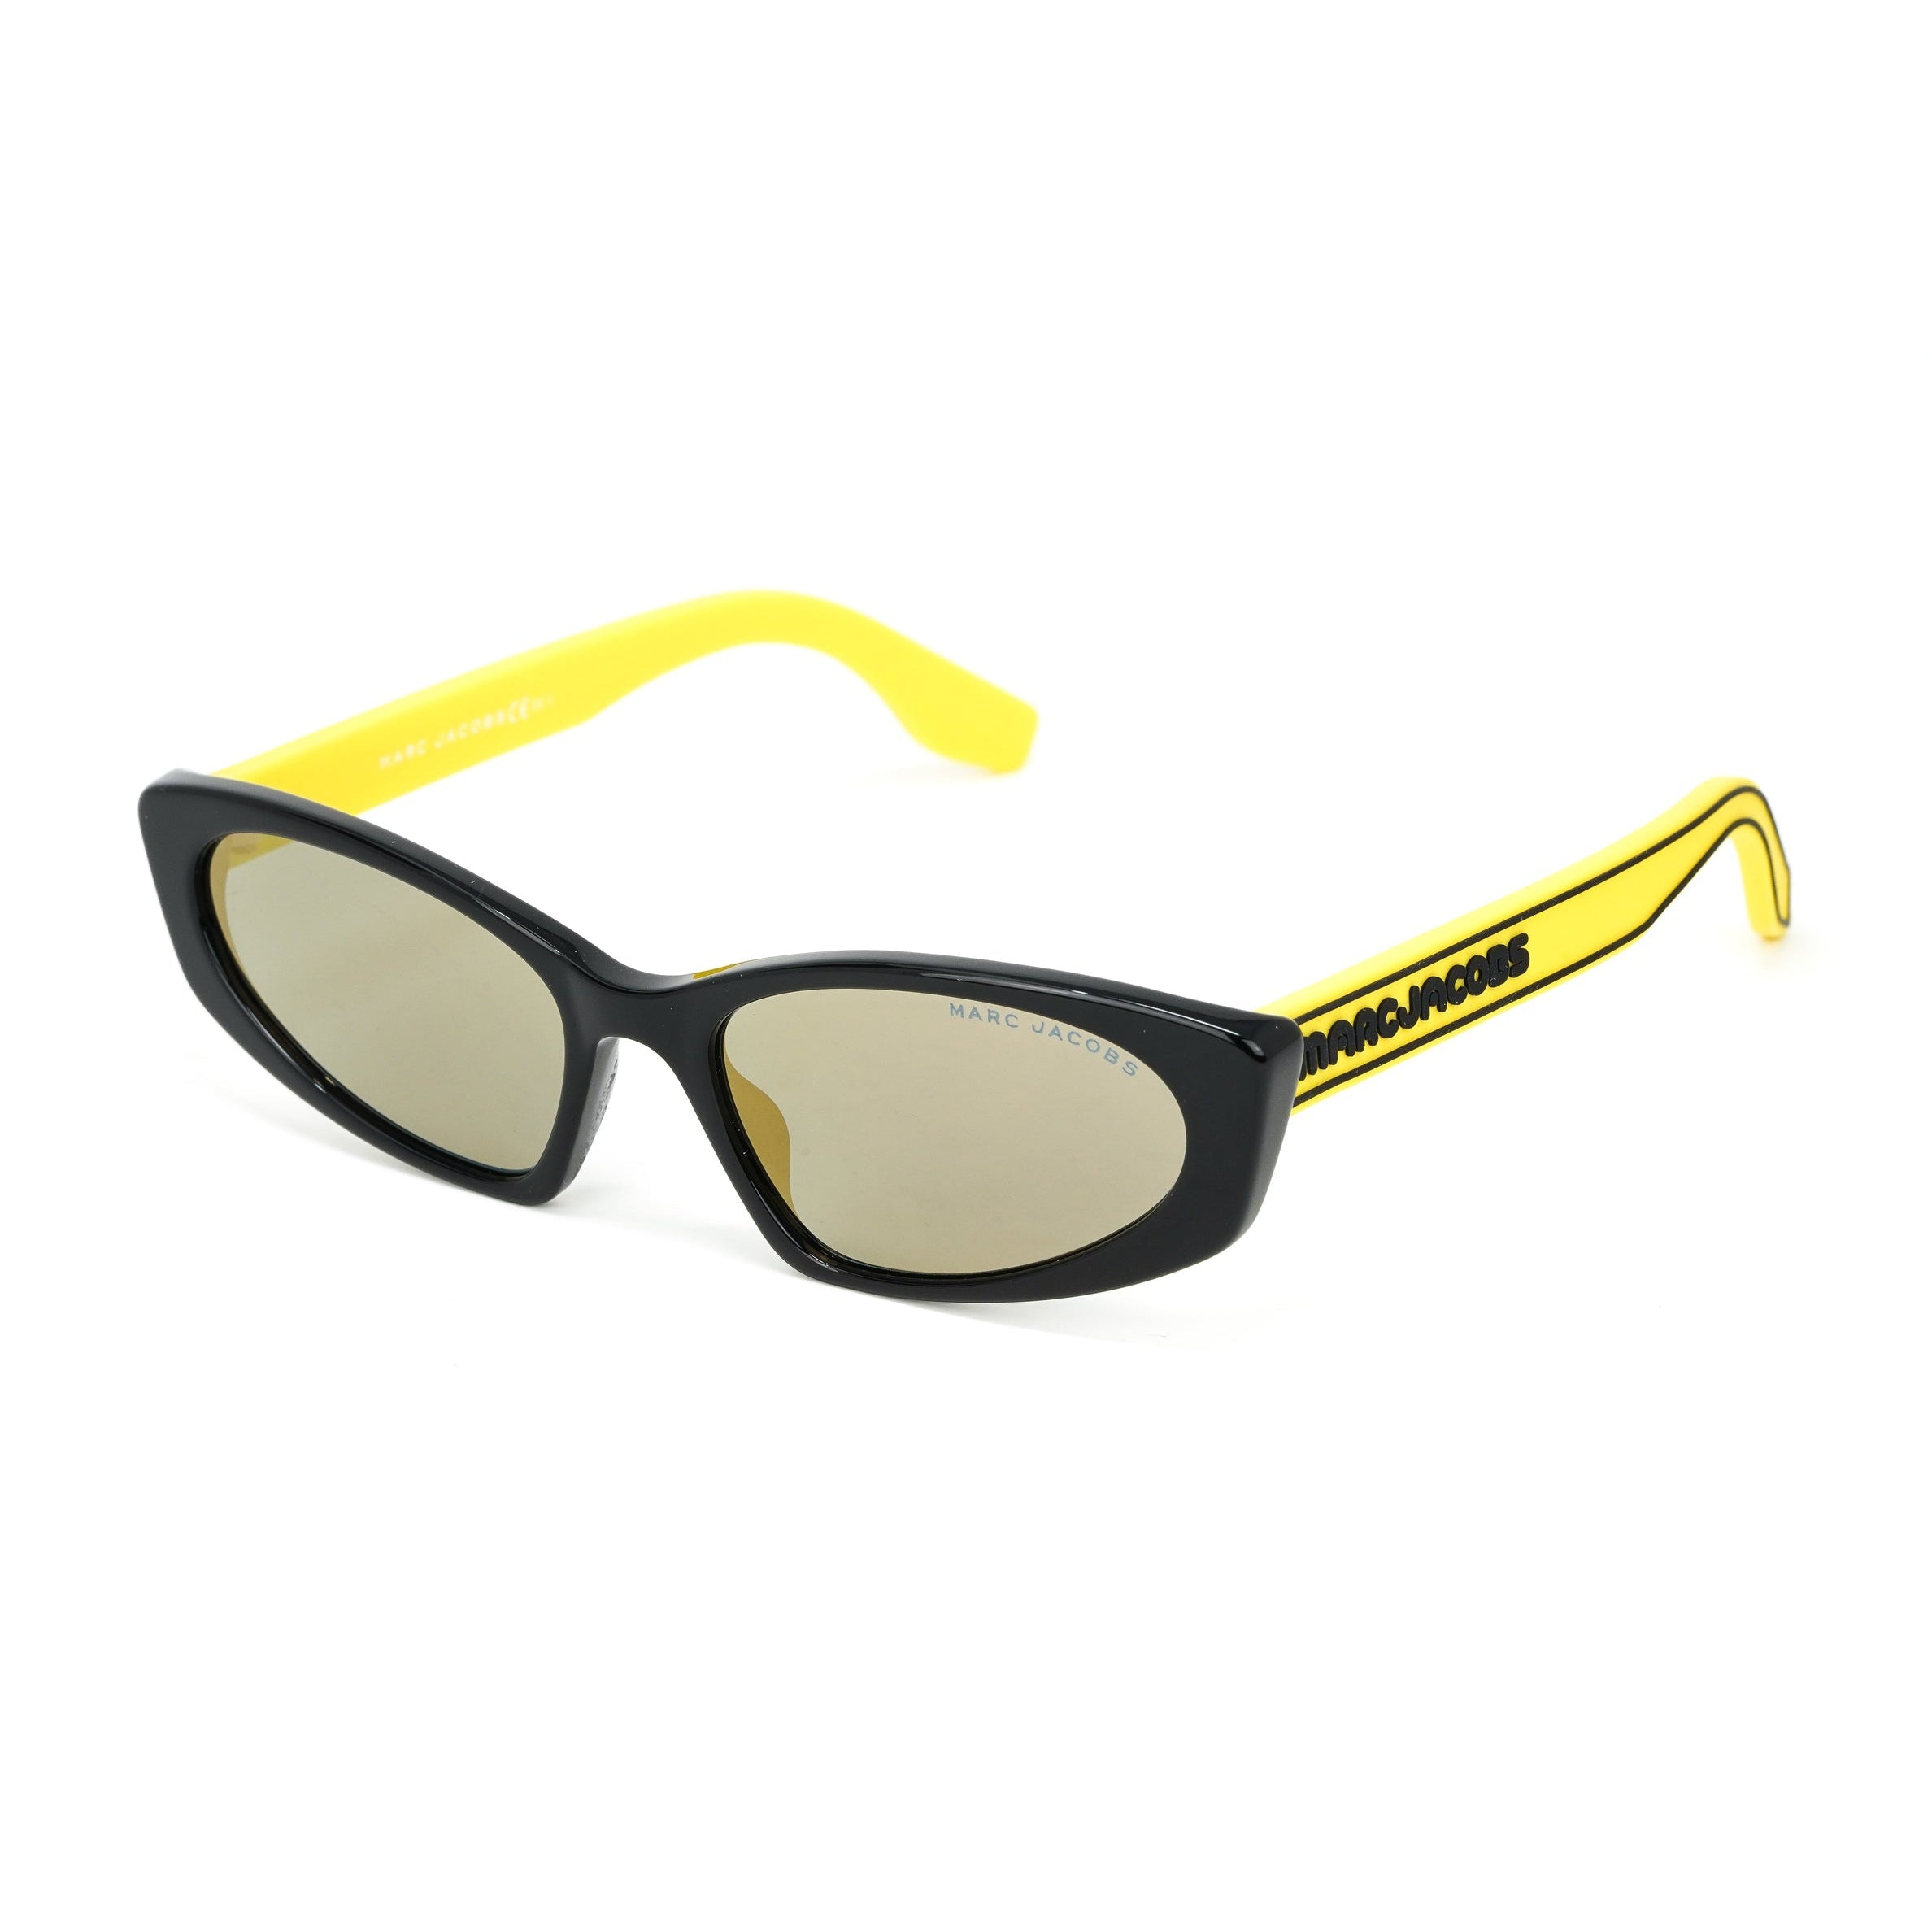 Marc Jacobs Women's Sunglasses Angular Black Yellow 356/S 40G